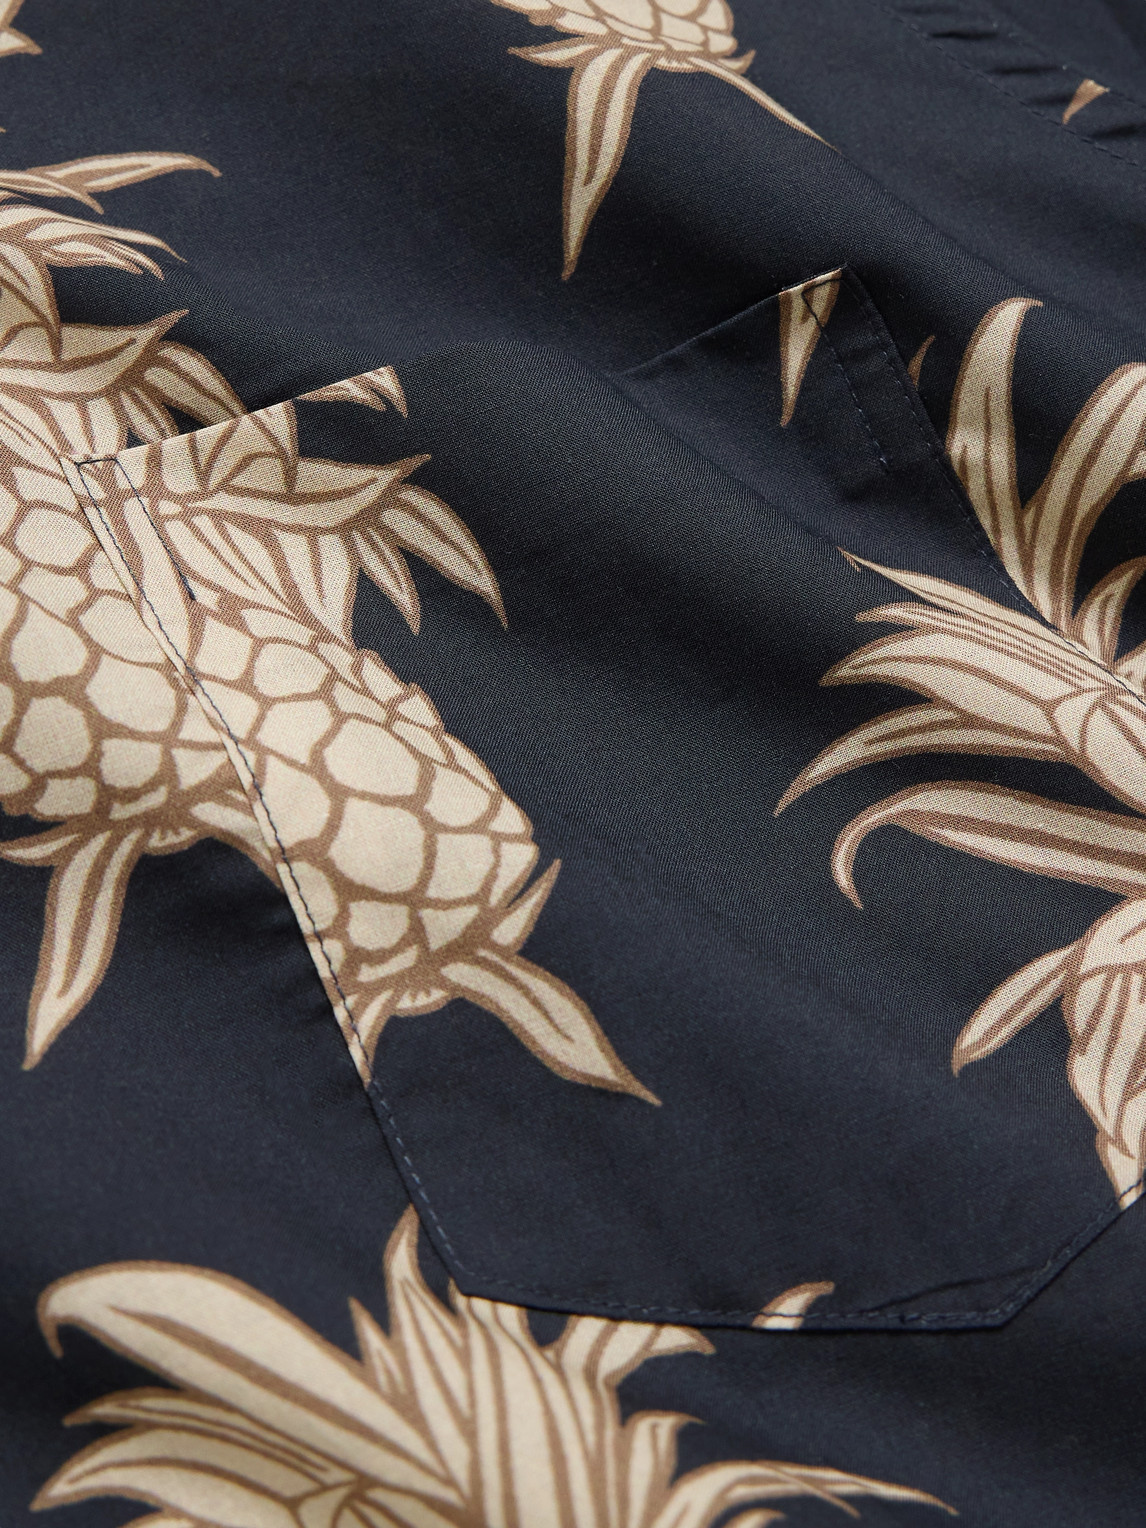 Shop Desmond & Dempsey Casp-collar Printed Cotton Pyjama Set In Black